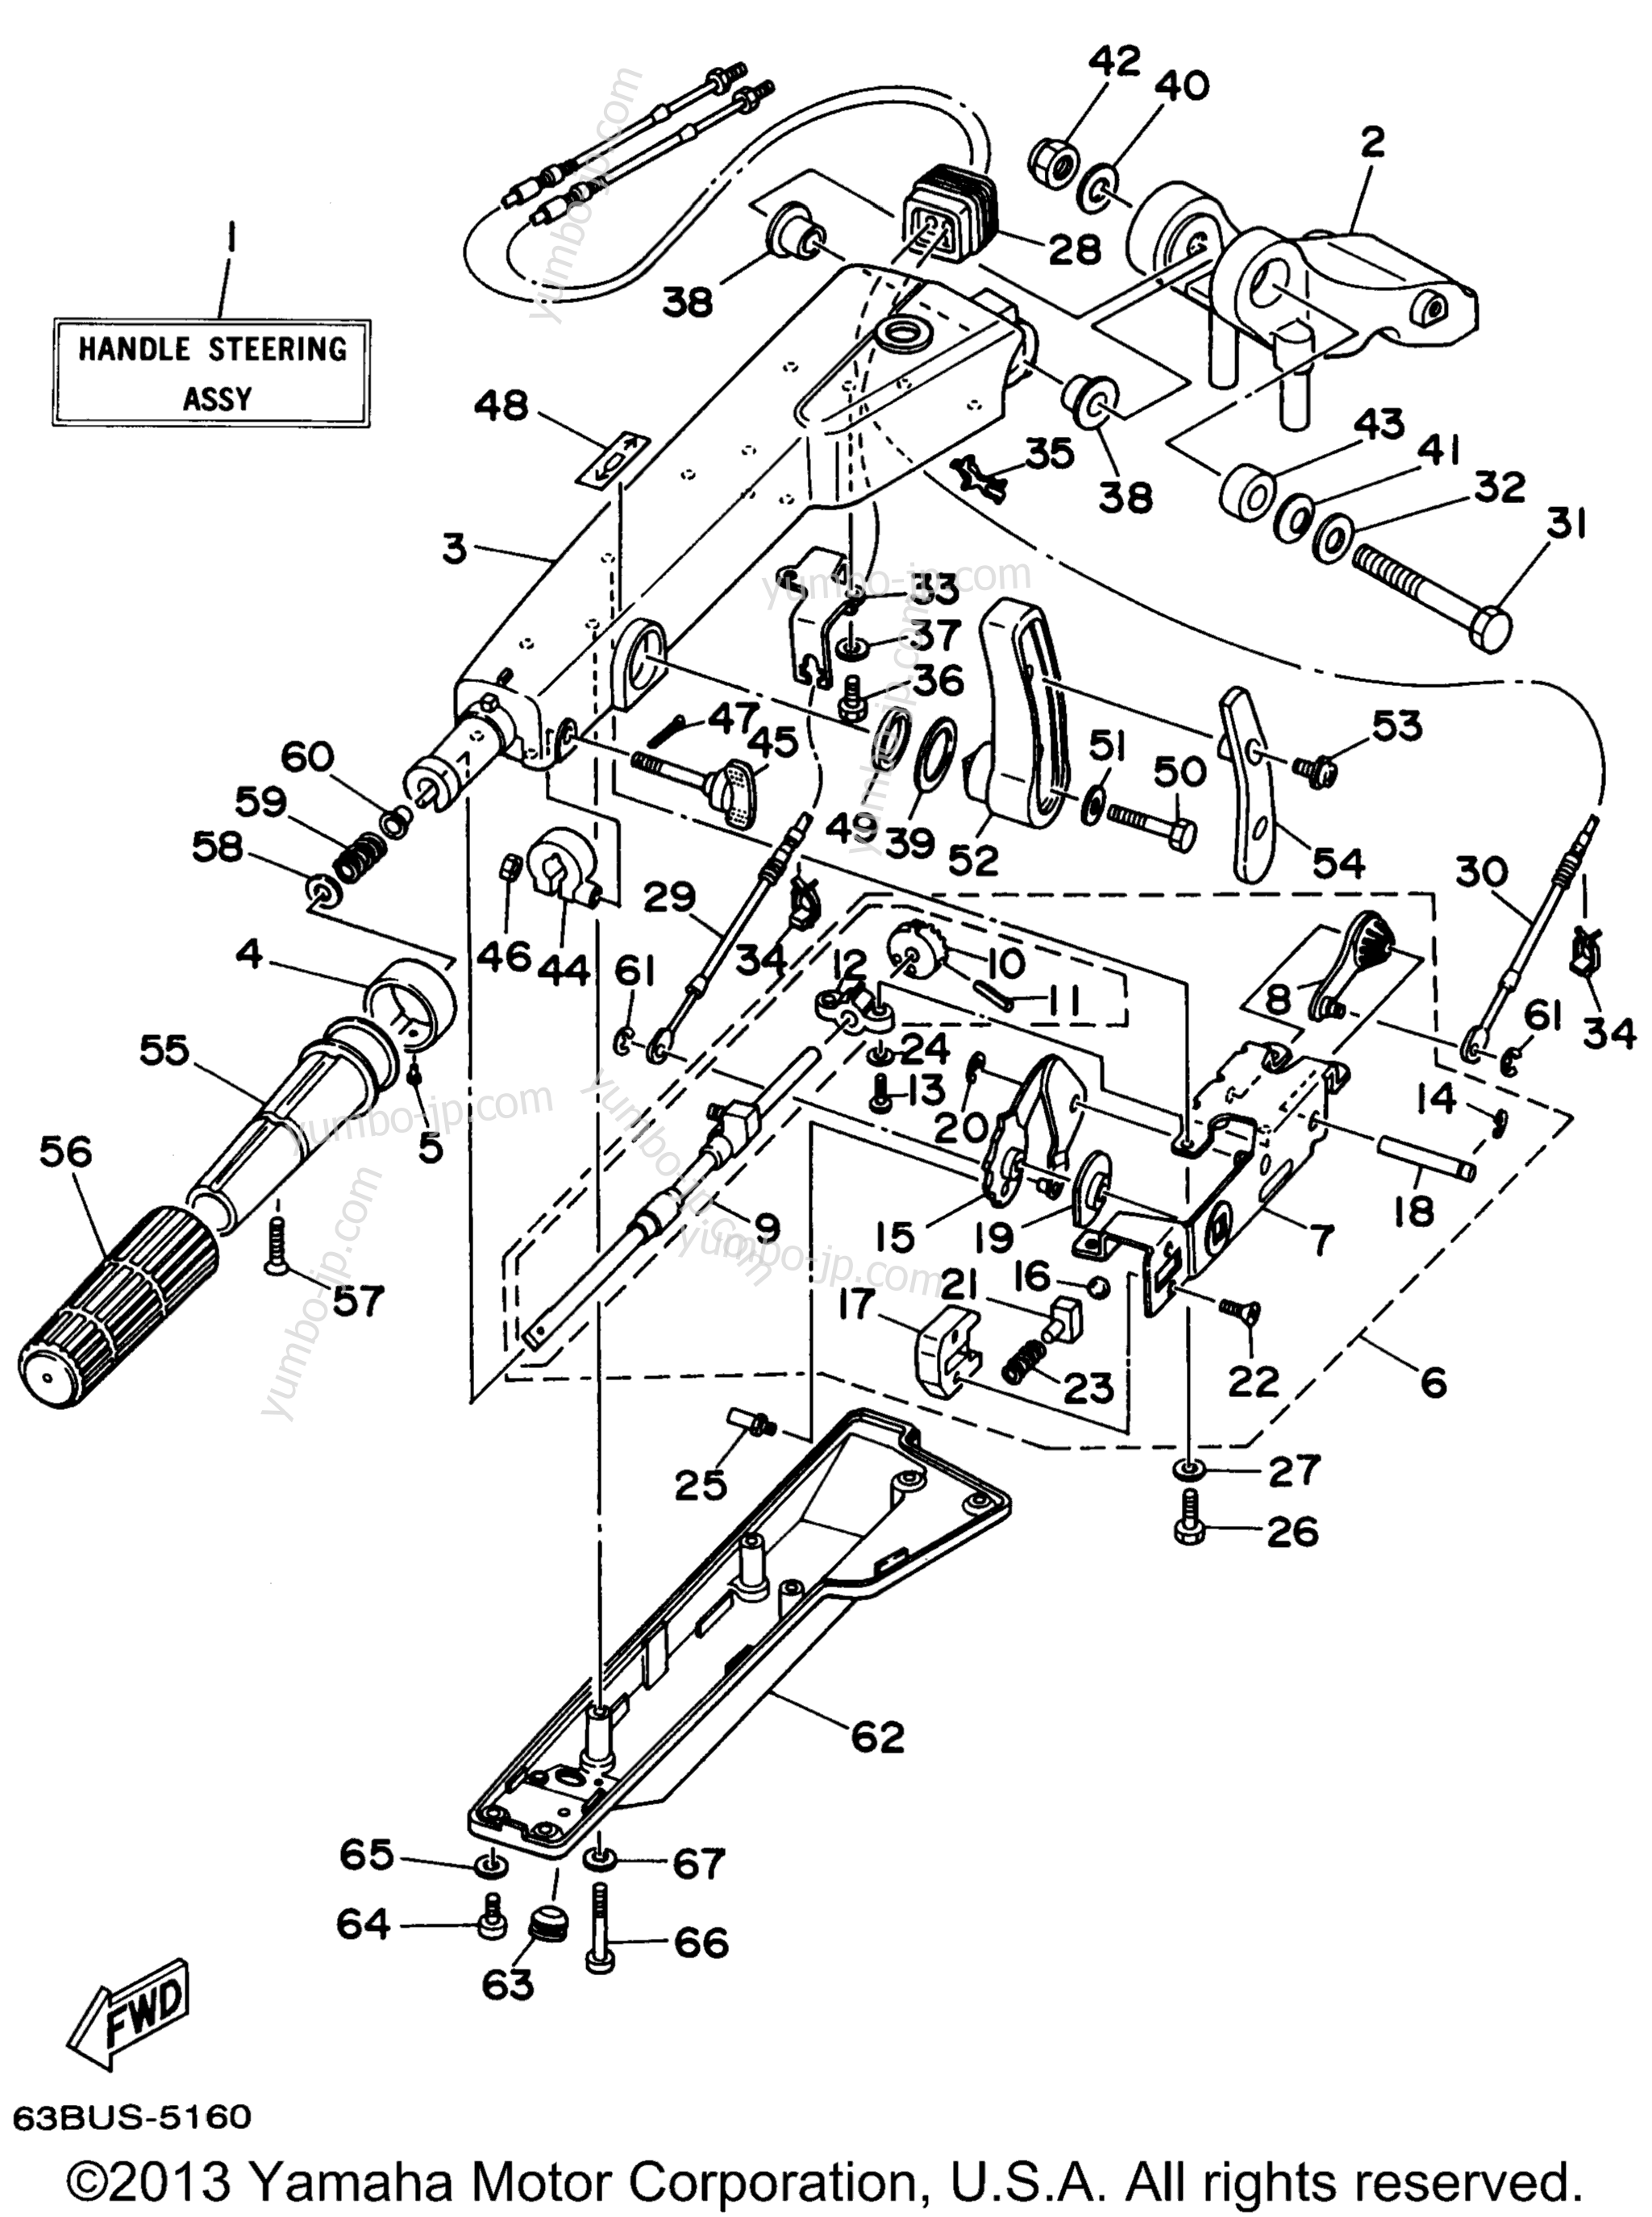 Steering для лодочных моторов YAMAHA P40EJRW_THLW (50ELRW) 1998 г.